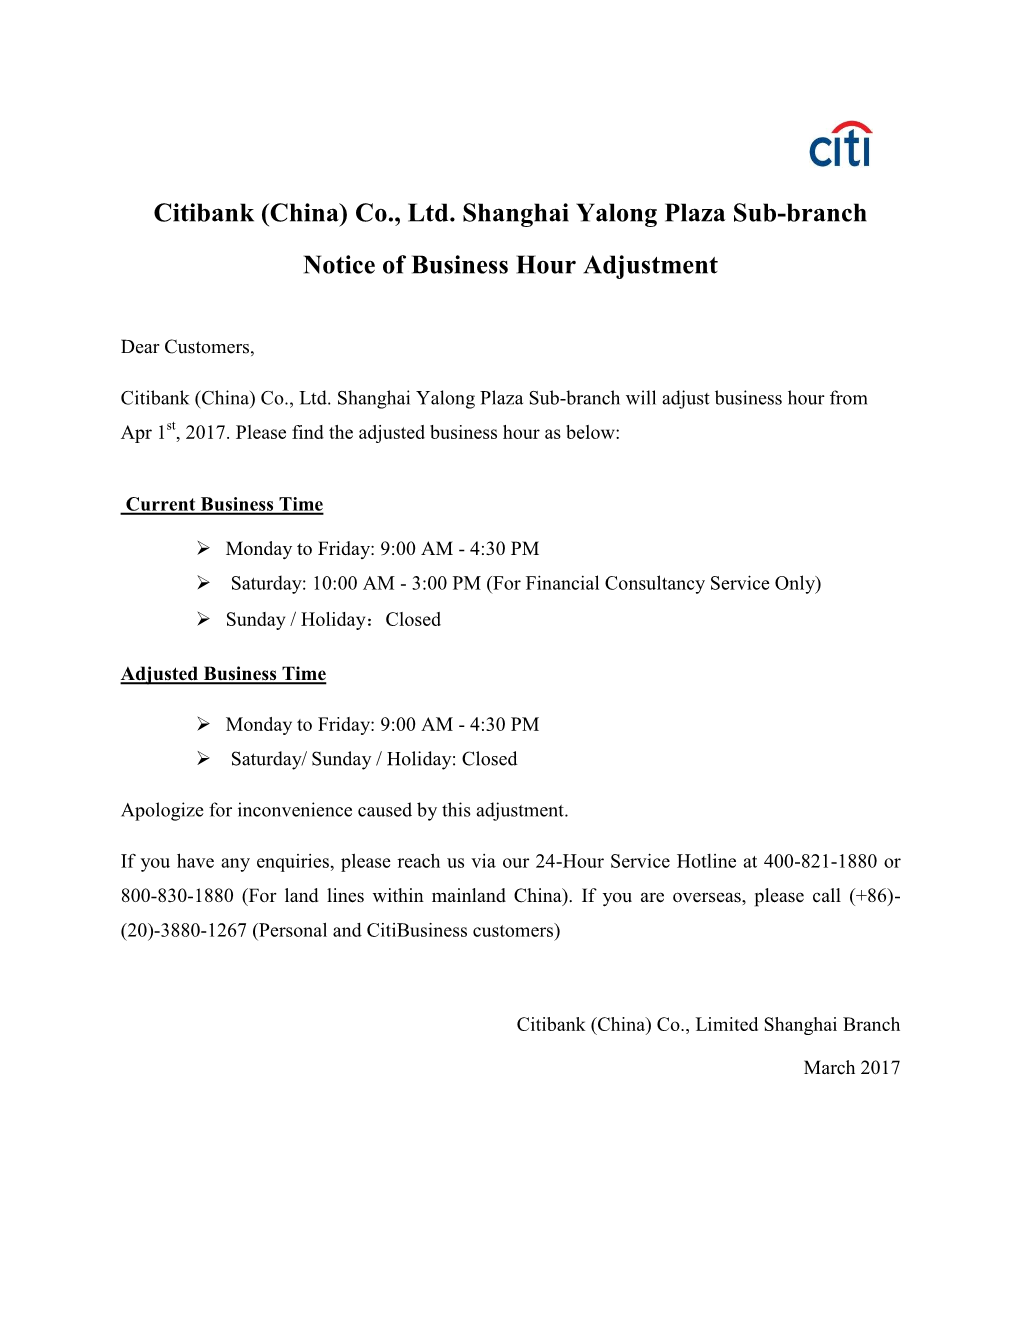 Citibank (China) Co., Ltd. Shanghai Yalong Plaza Sub-Branch Notice of Business Hour Adjustment